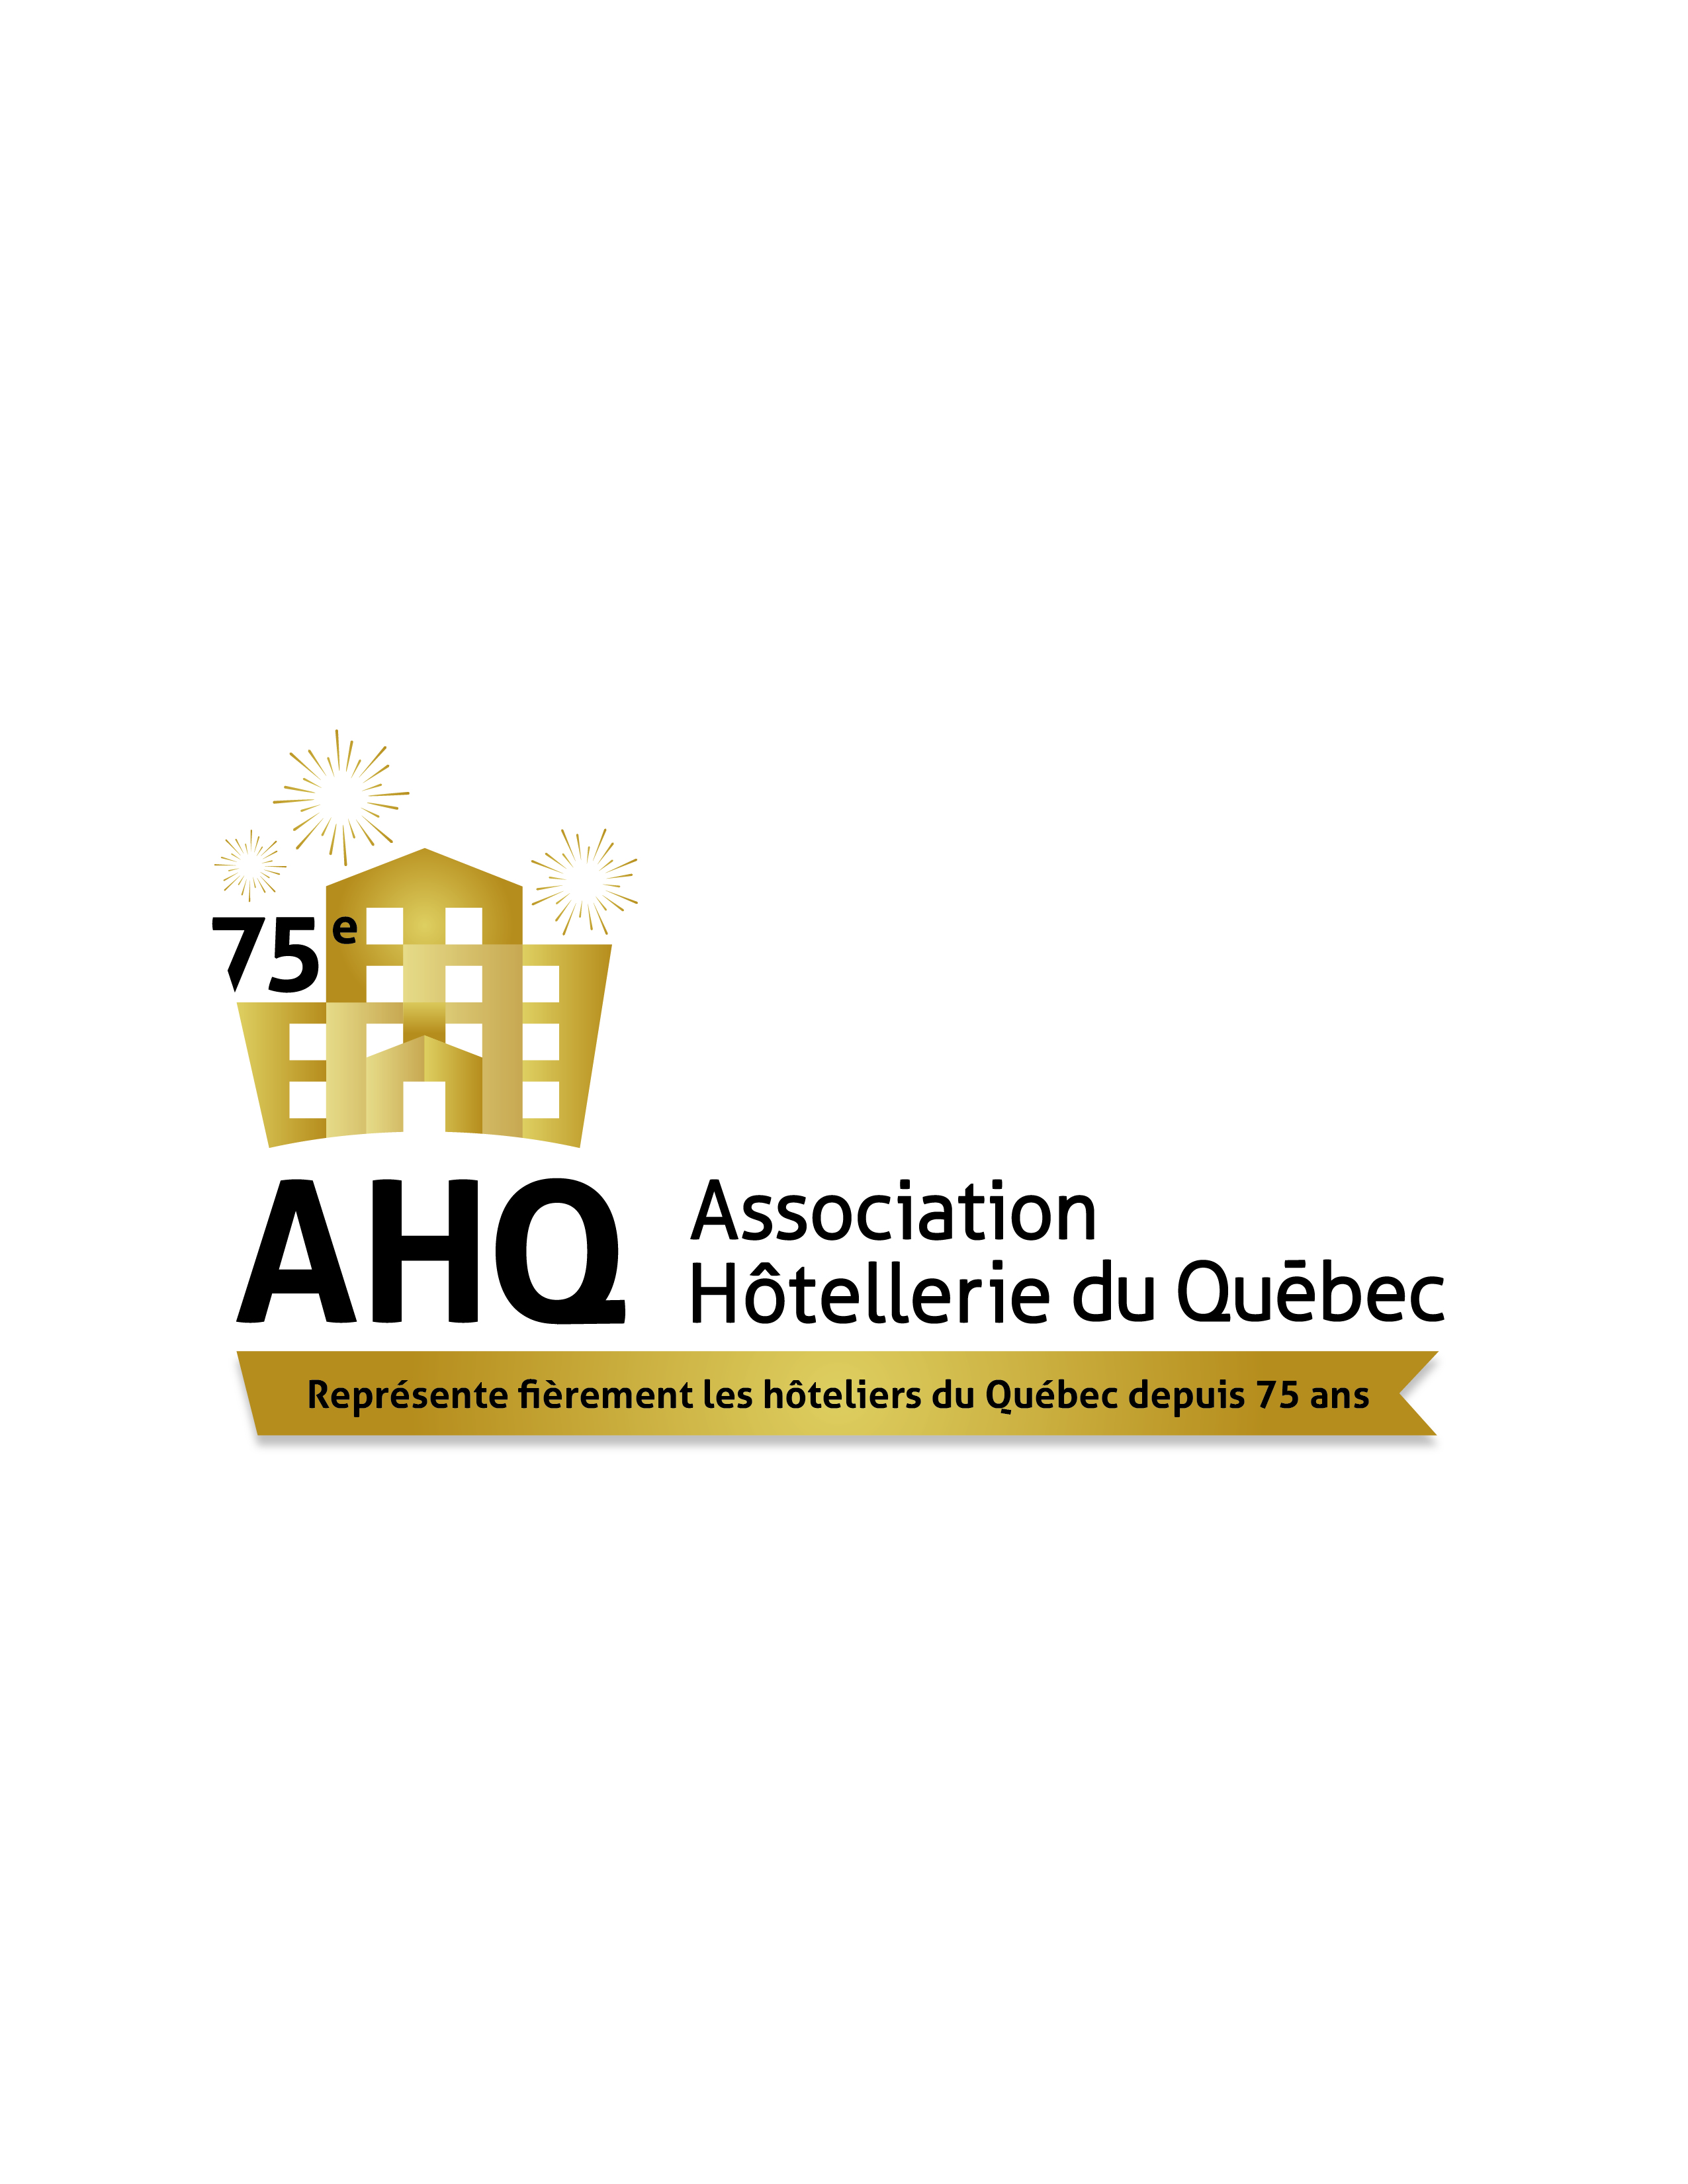 Association Hôtellerie du Québec